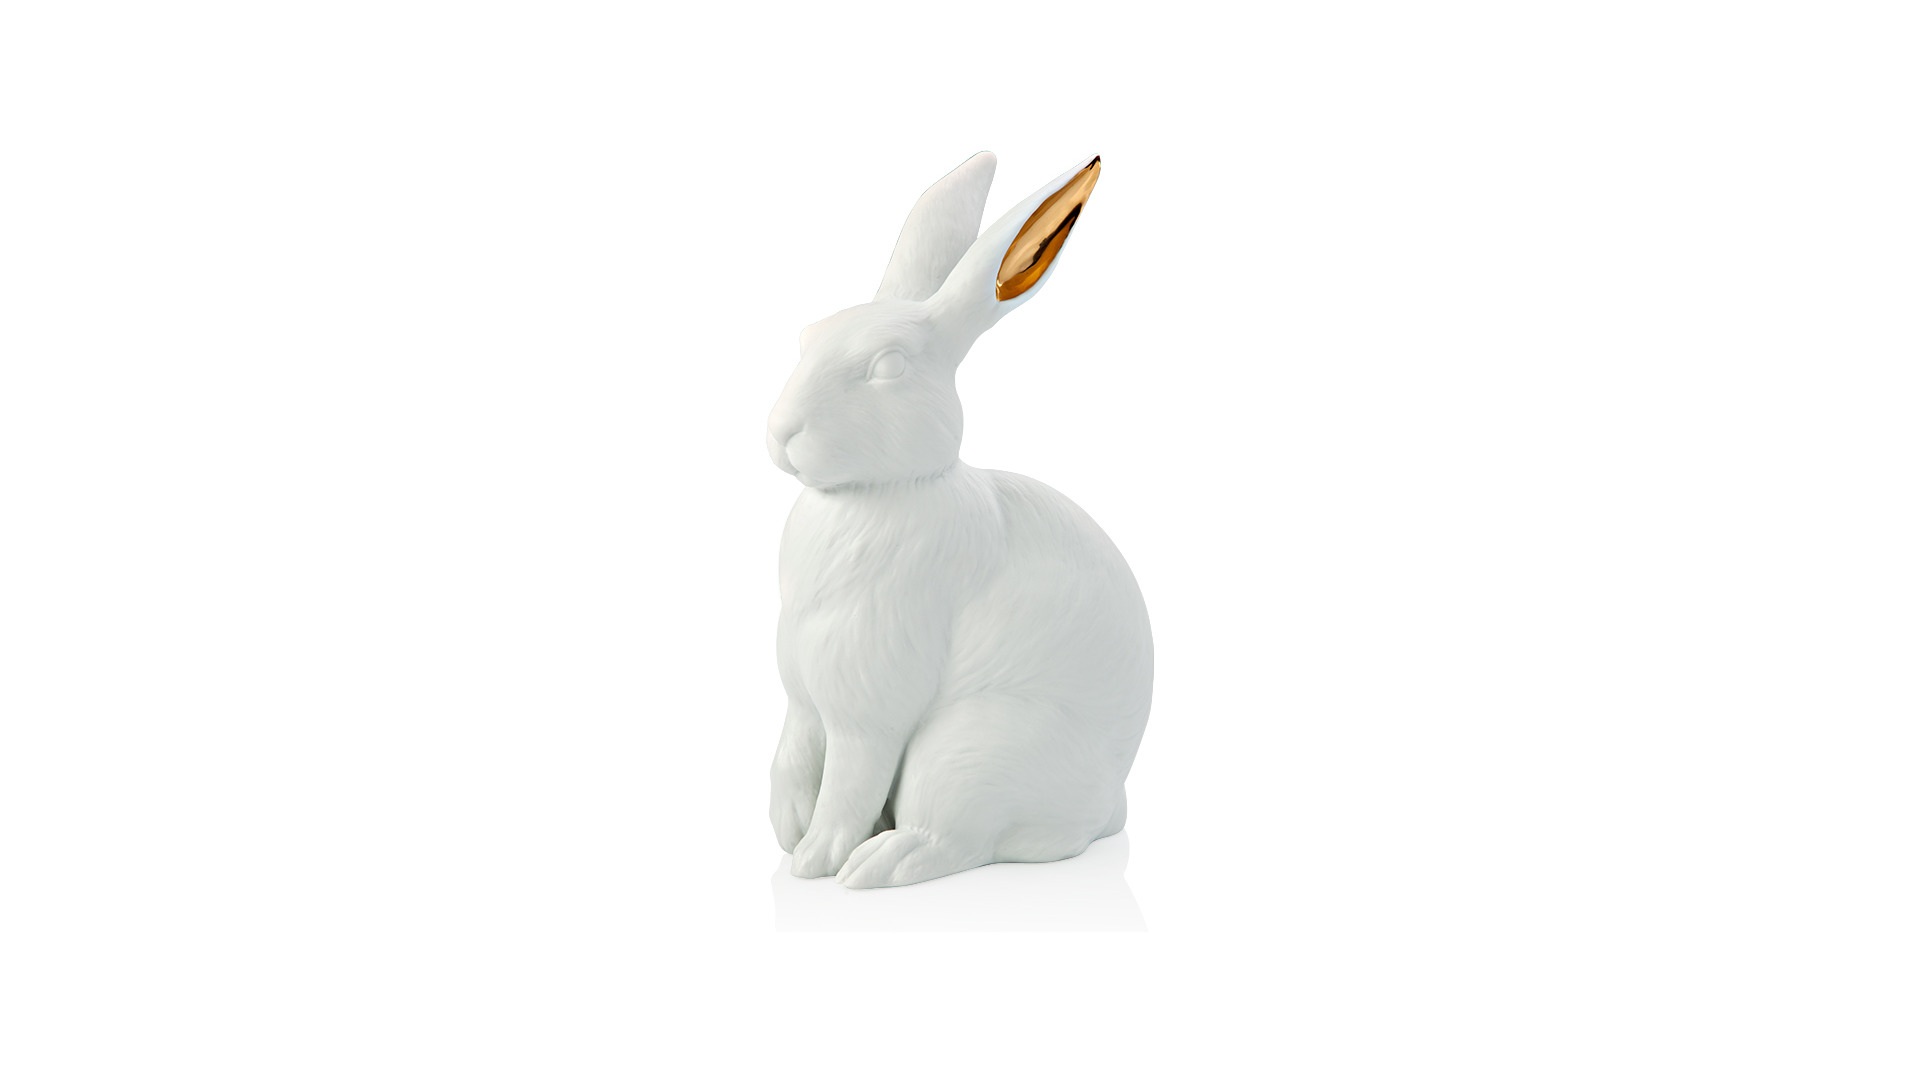 Фигурка 13х10х23см "Белый кролик" (позолота)